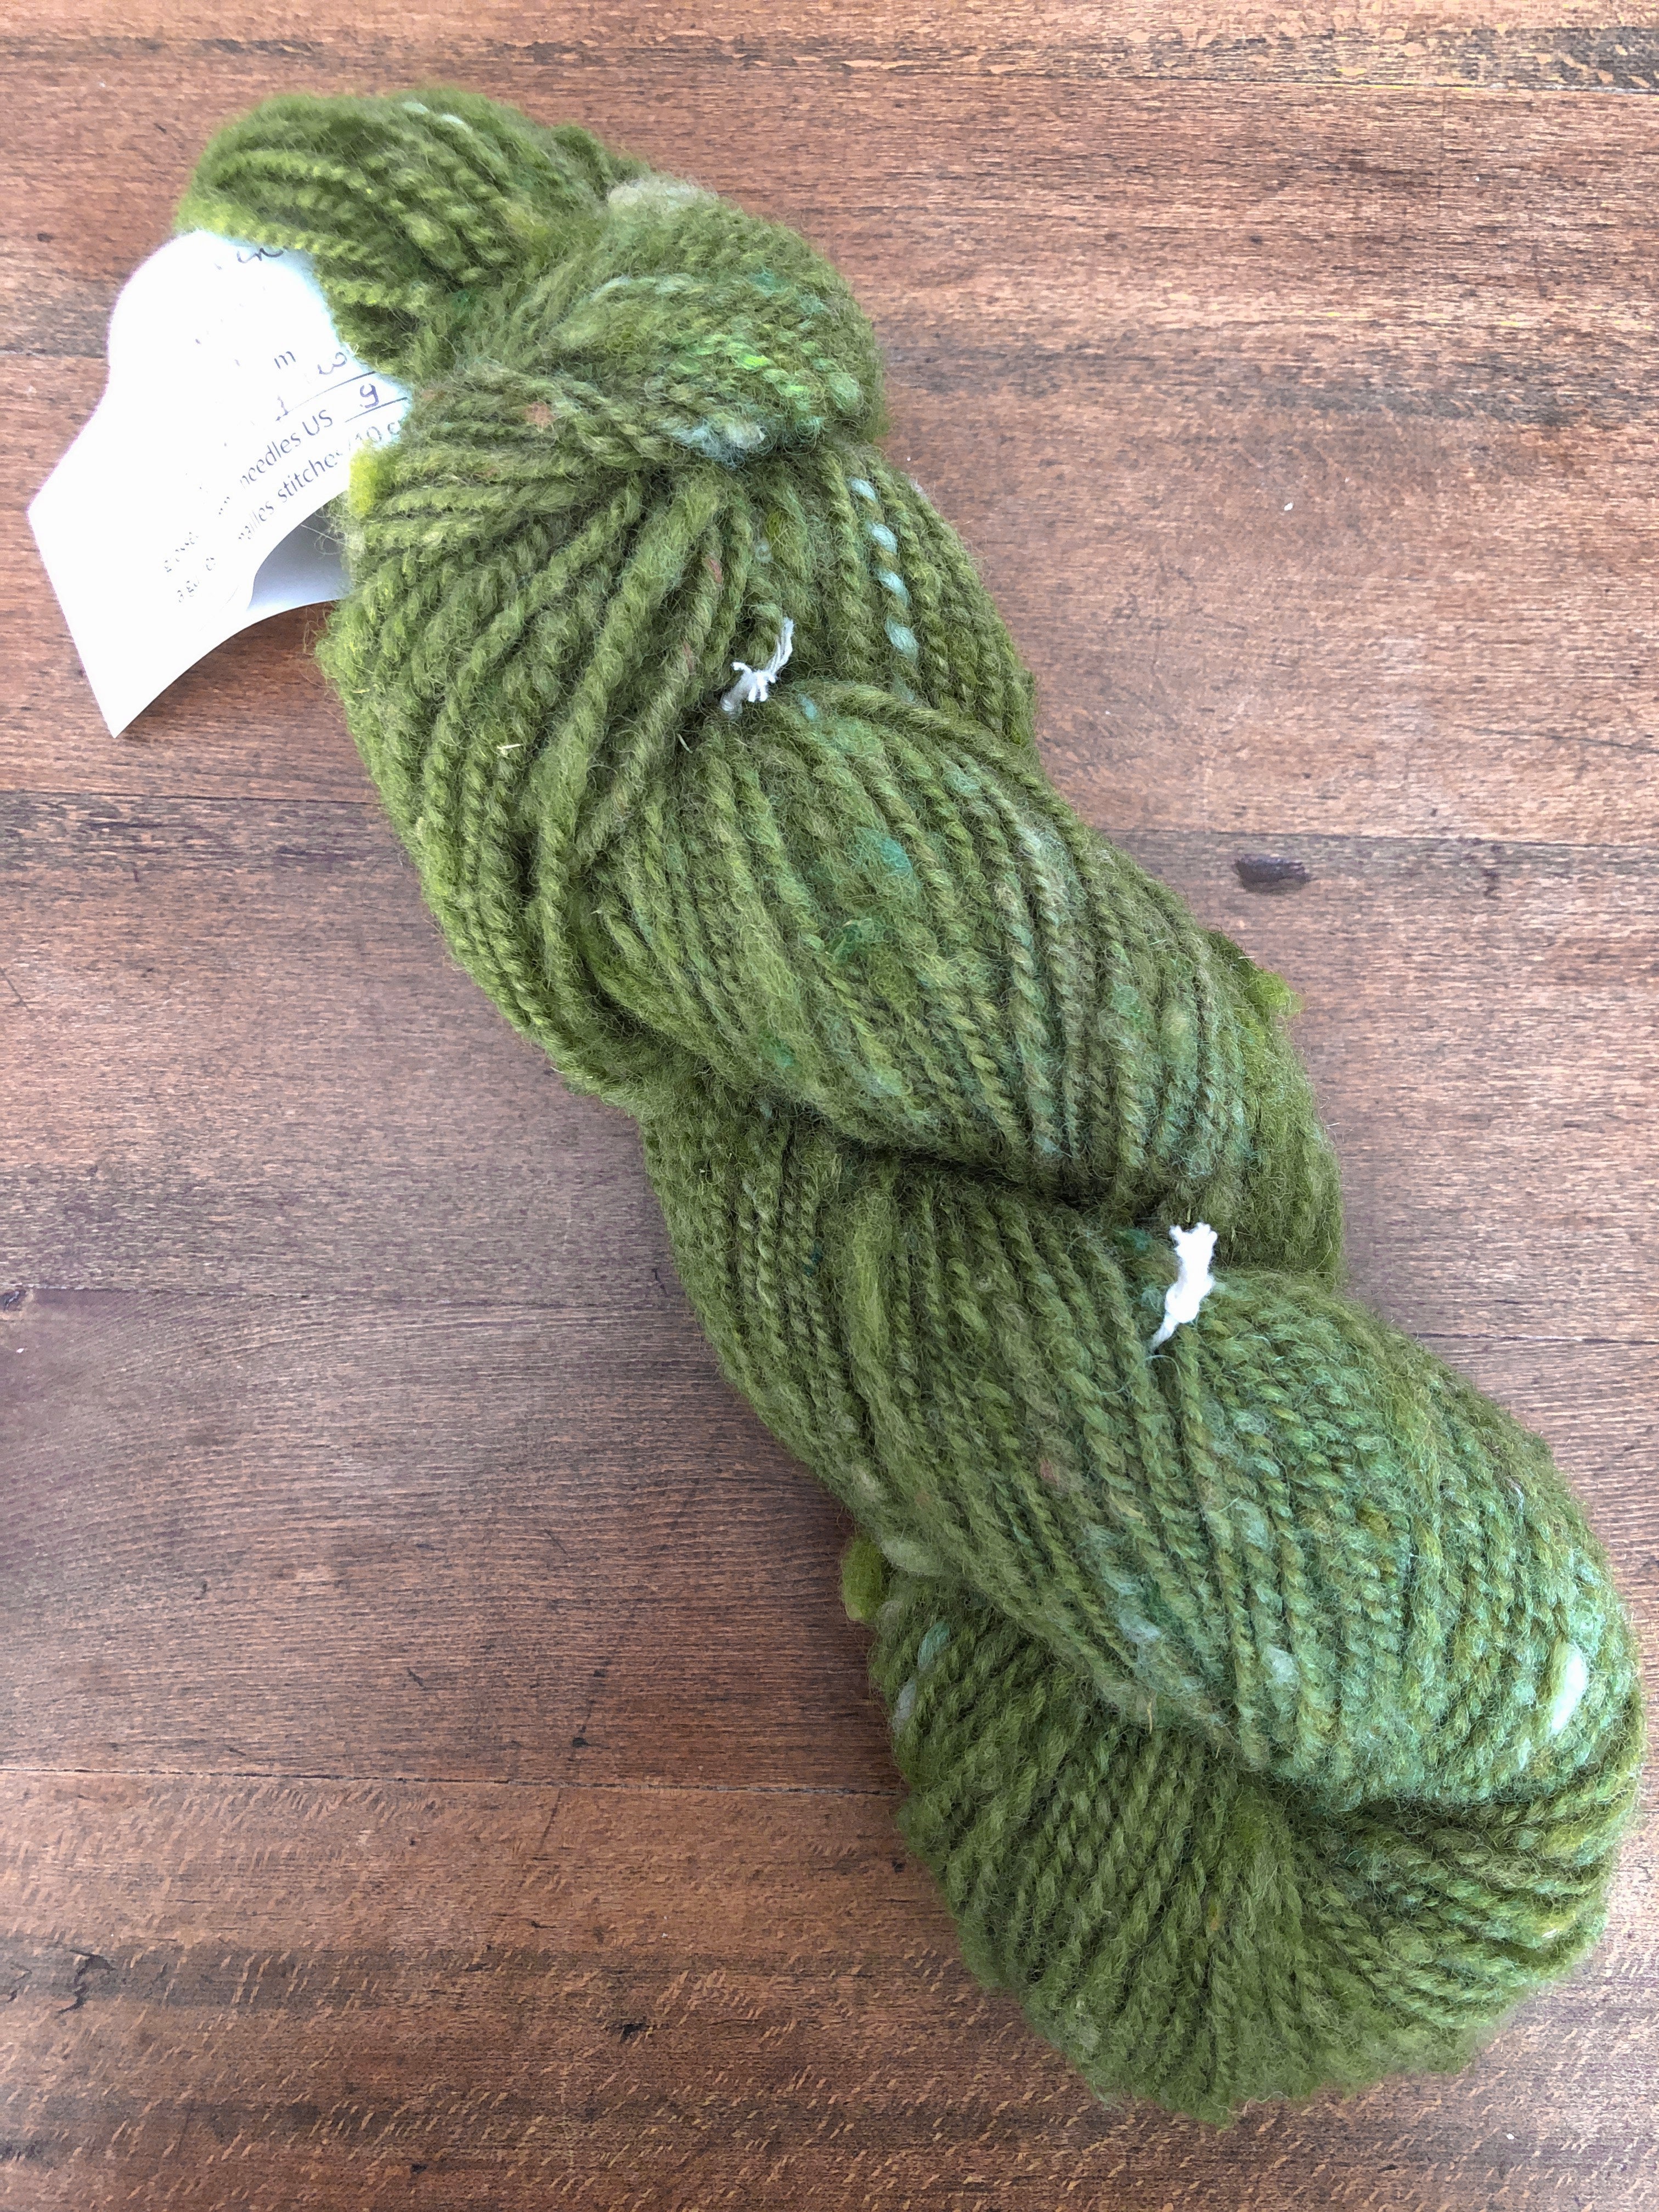 Basil Green Hand-Dyed Heavy Worsted Wool Yarn